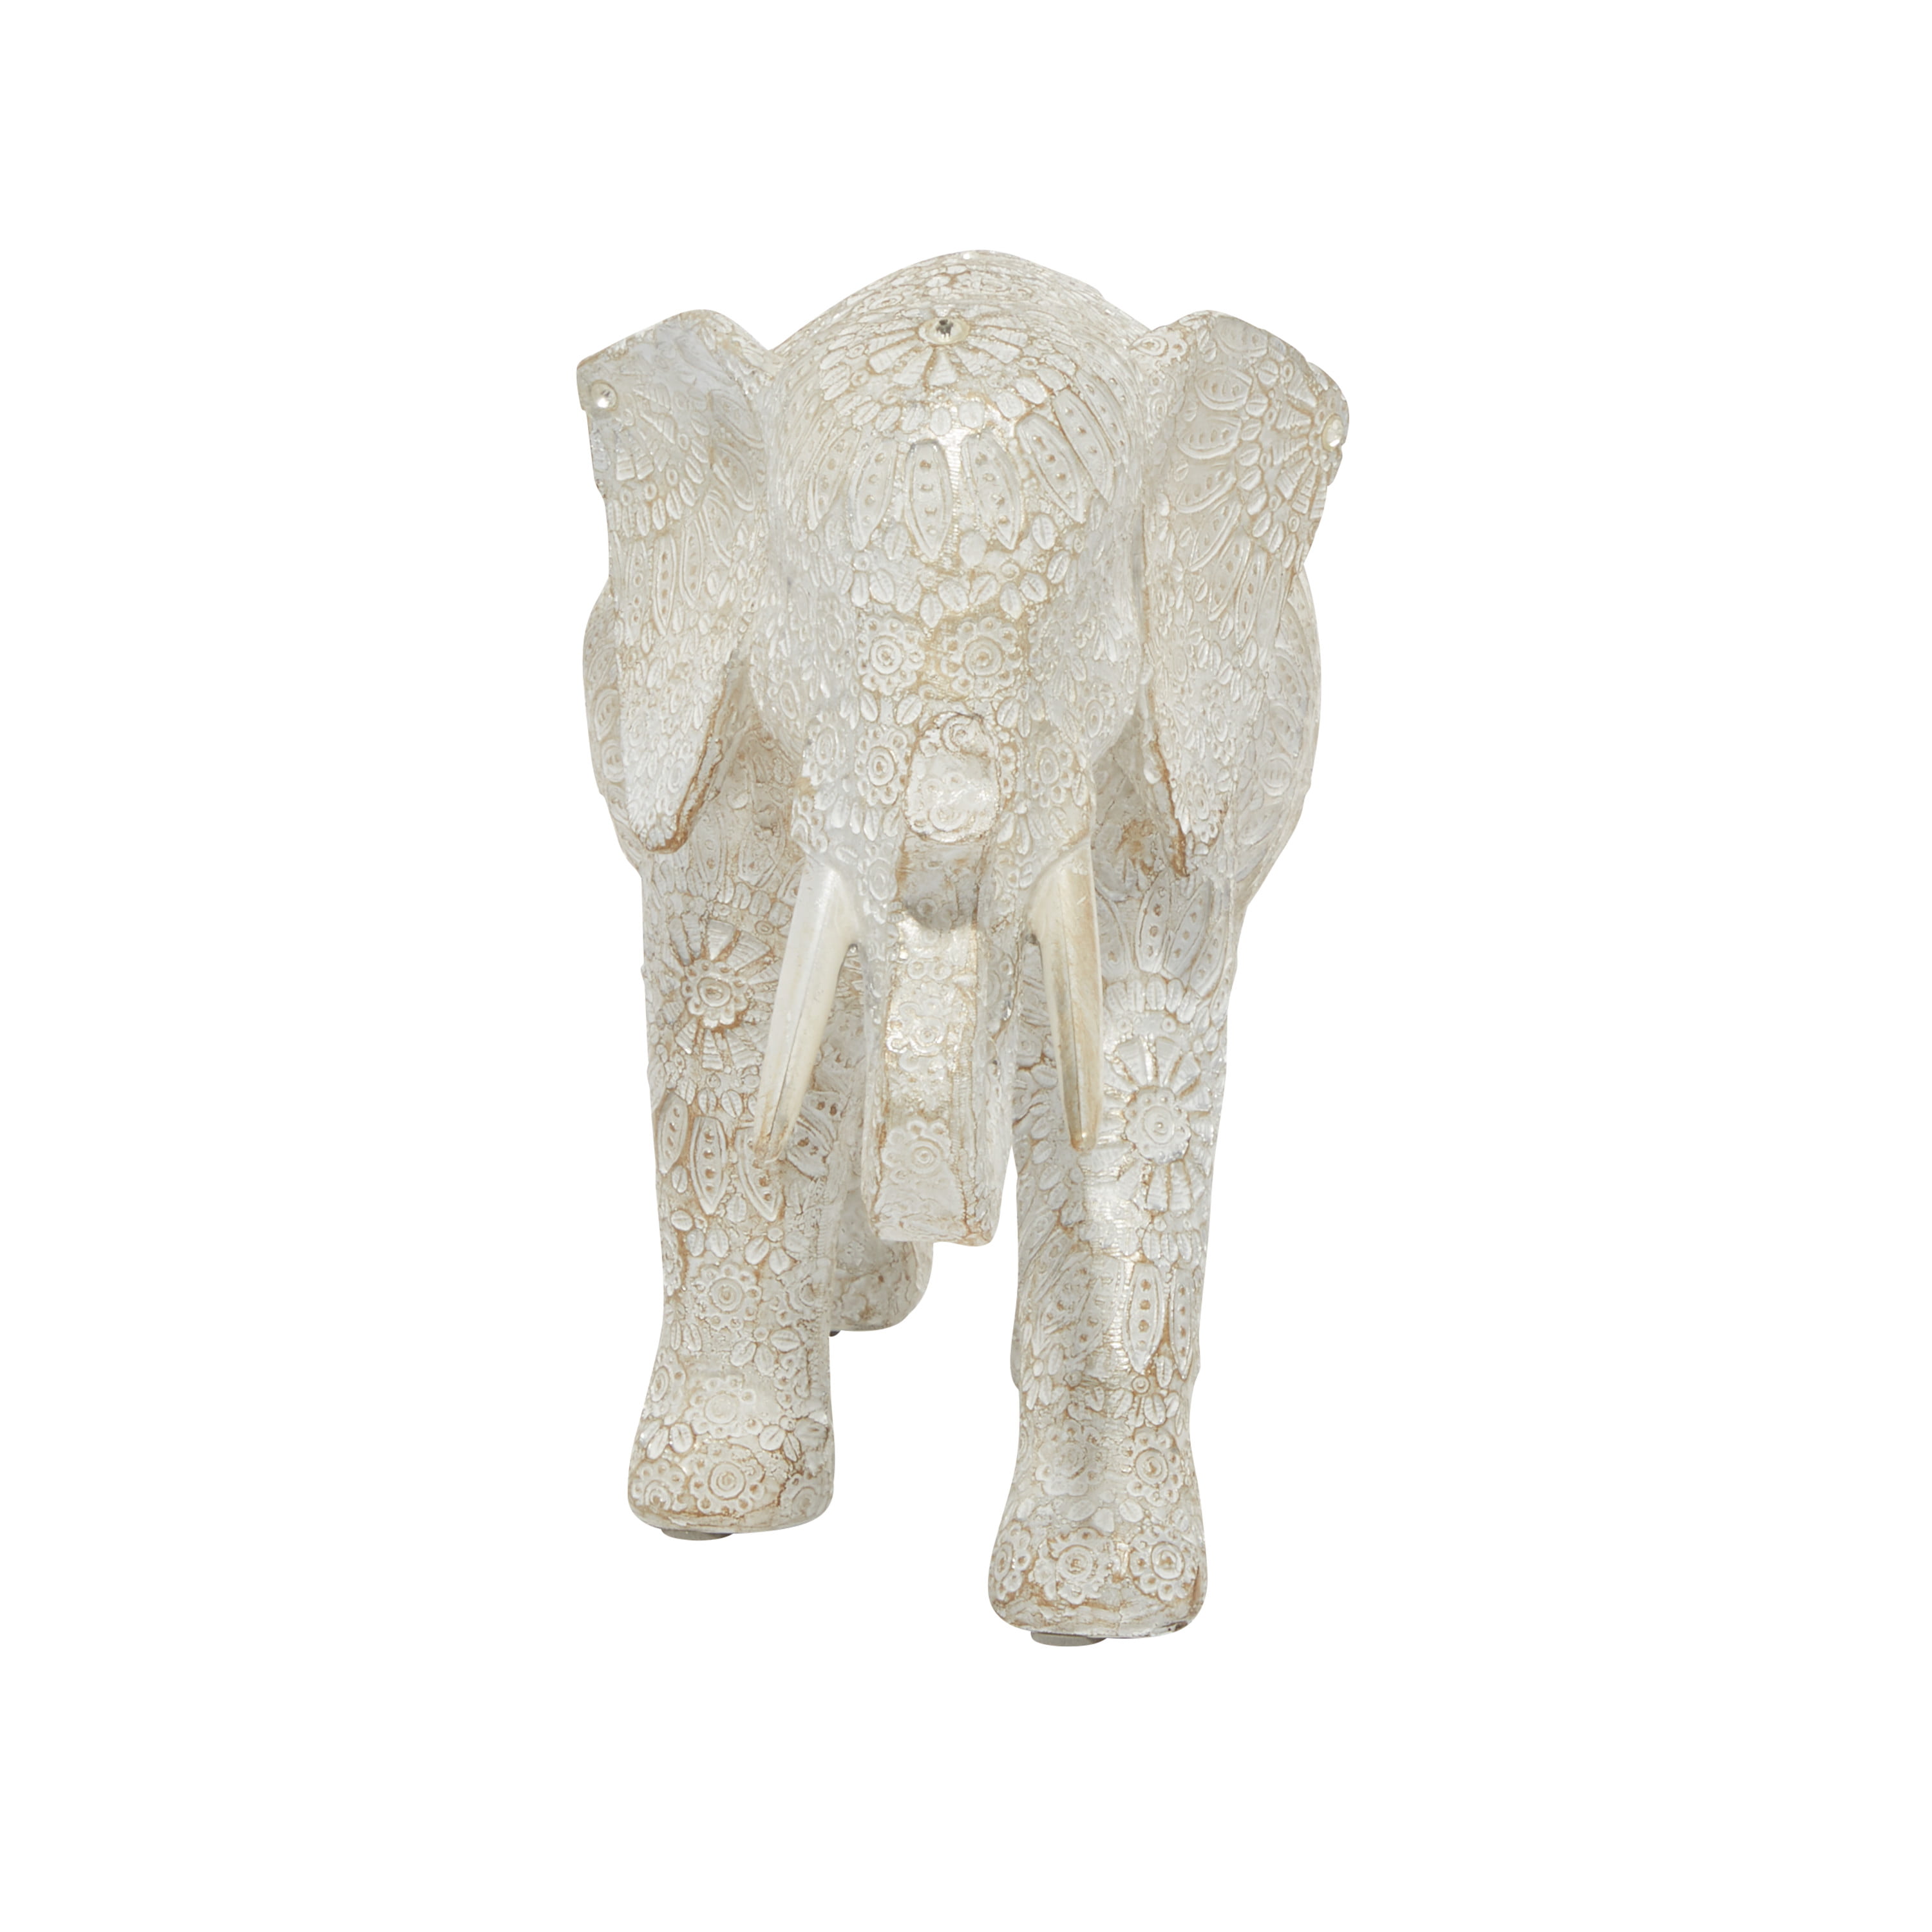 White elephant statue stock image. Image of believe - 100645271